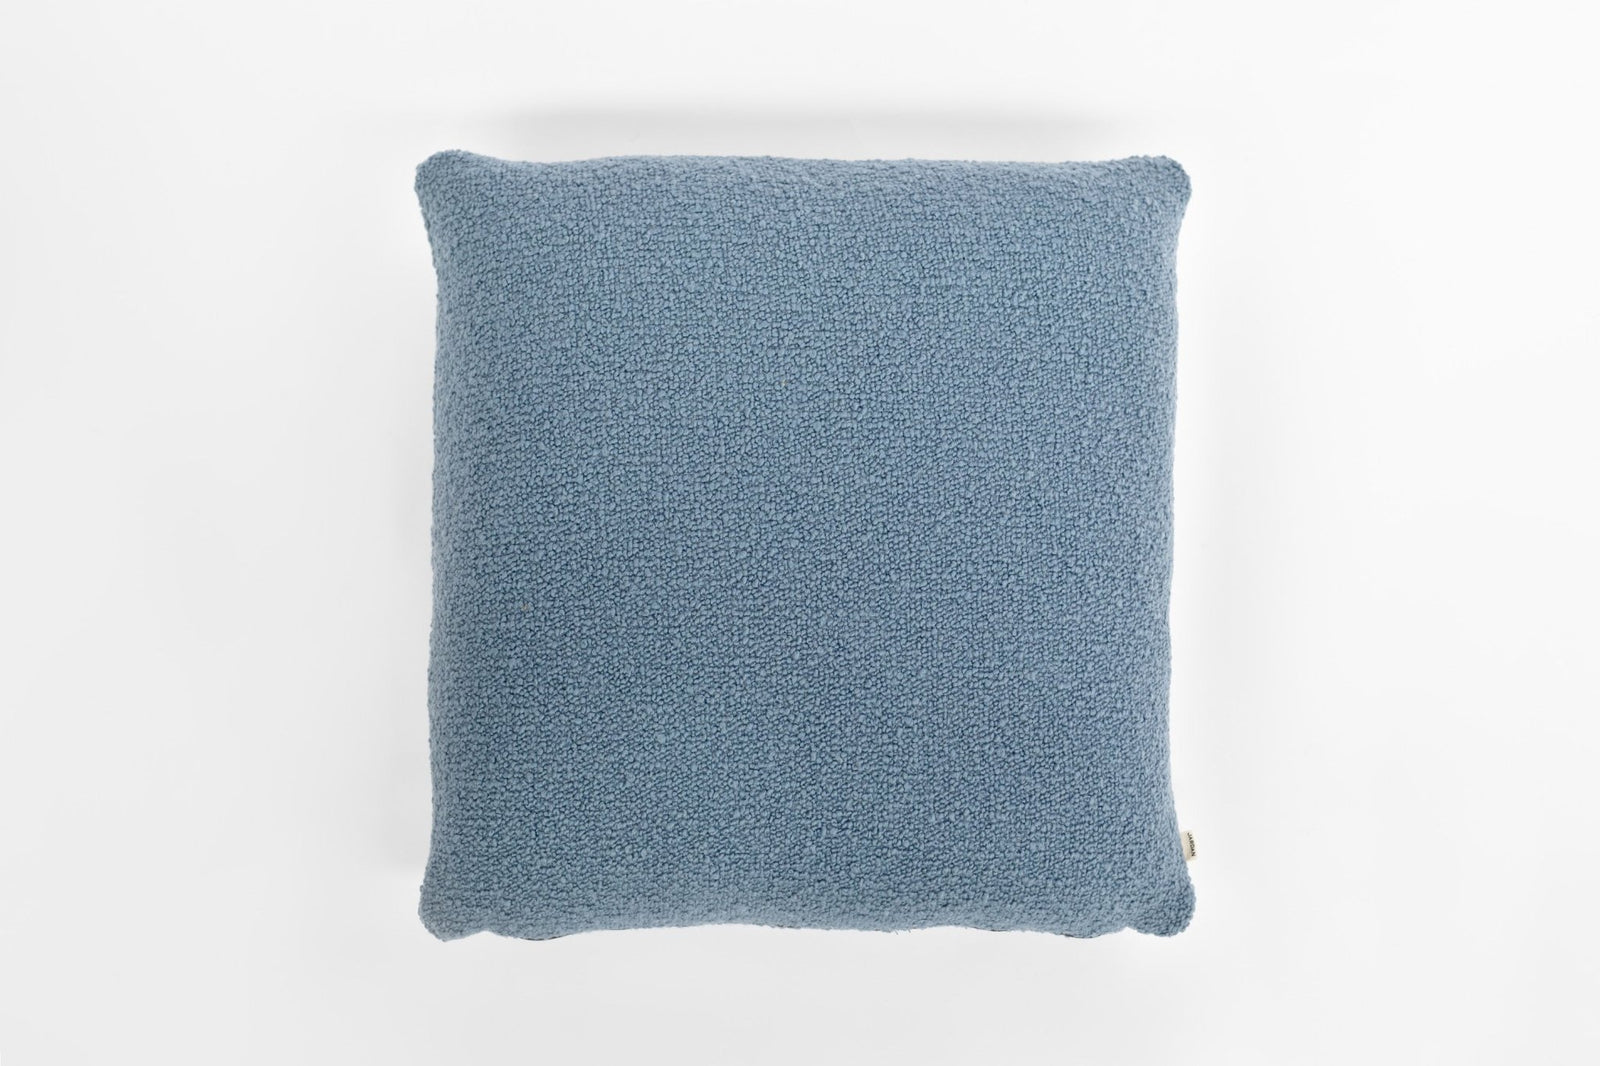 Poppy Cushion Denim Wool Square 54 x 54cm Denim